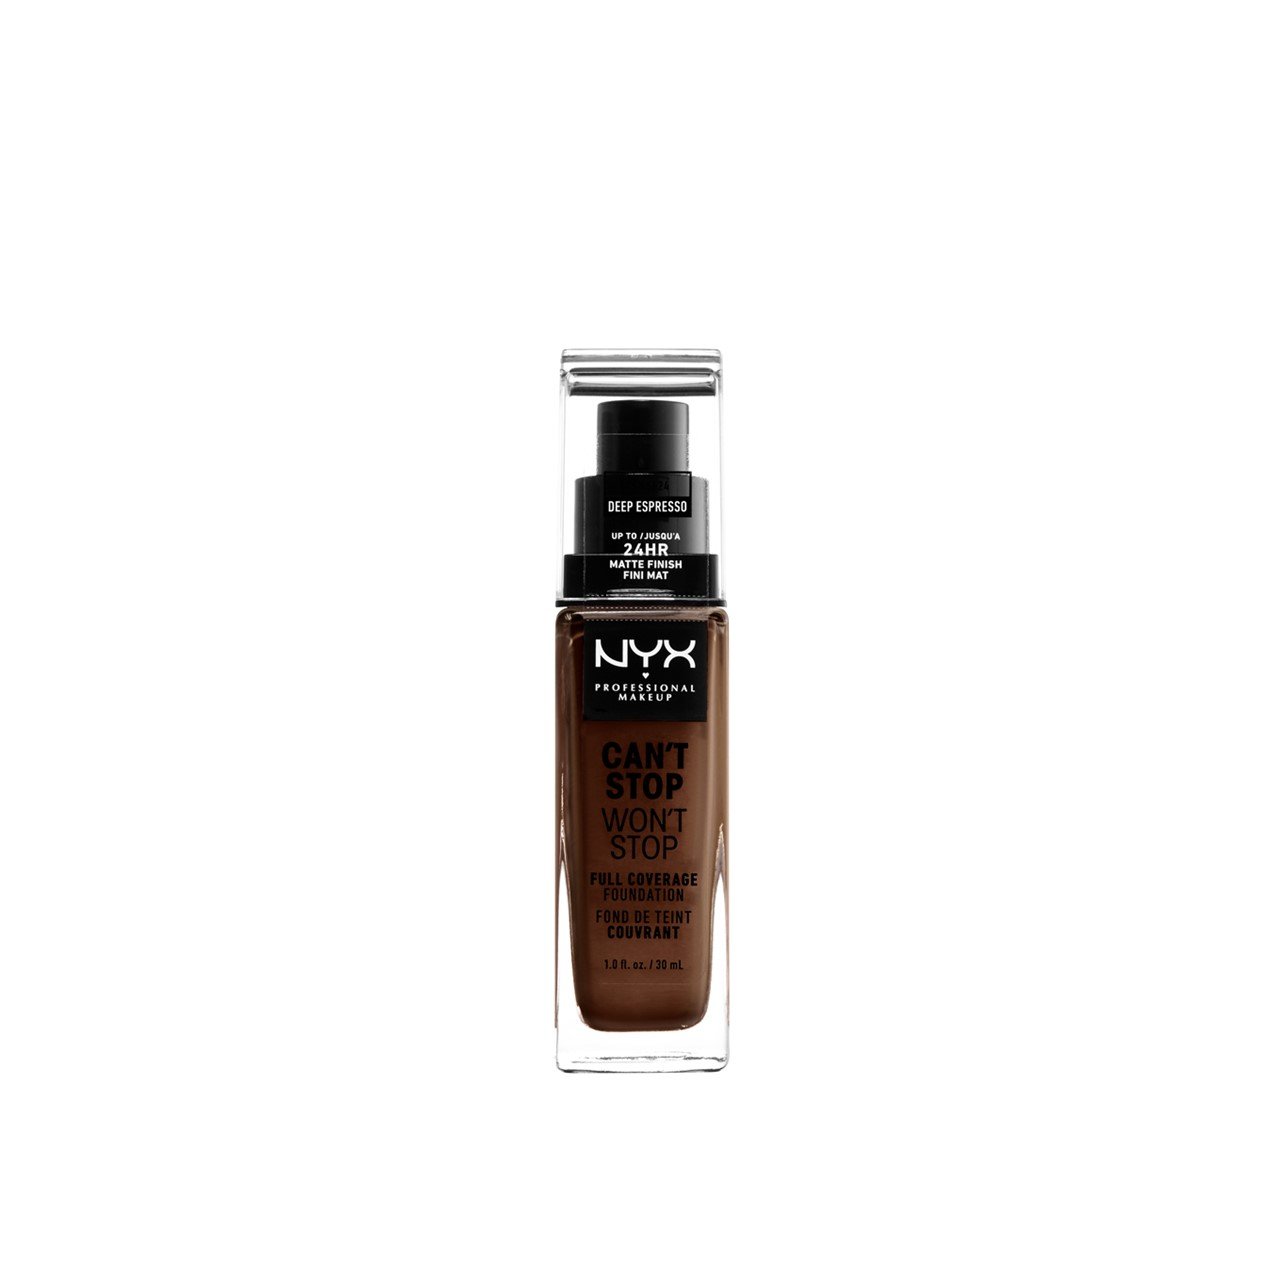 NYX Pro Makeup Can't Stop Won't Stop Foundation Deep Espresso 30ml (1.01fl oz)